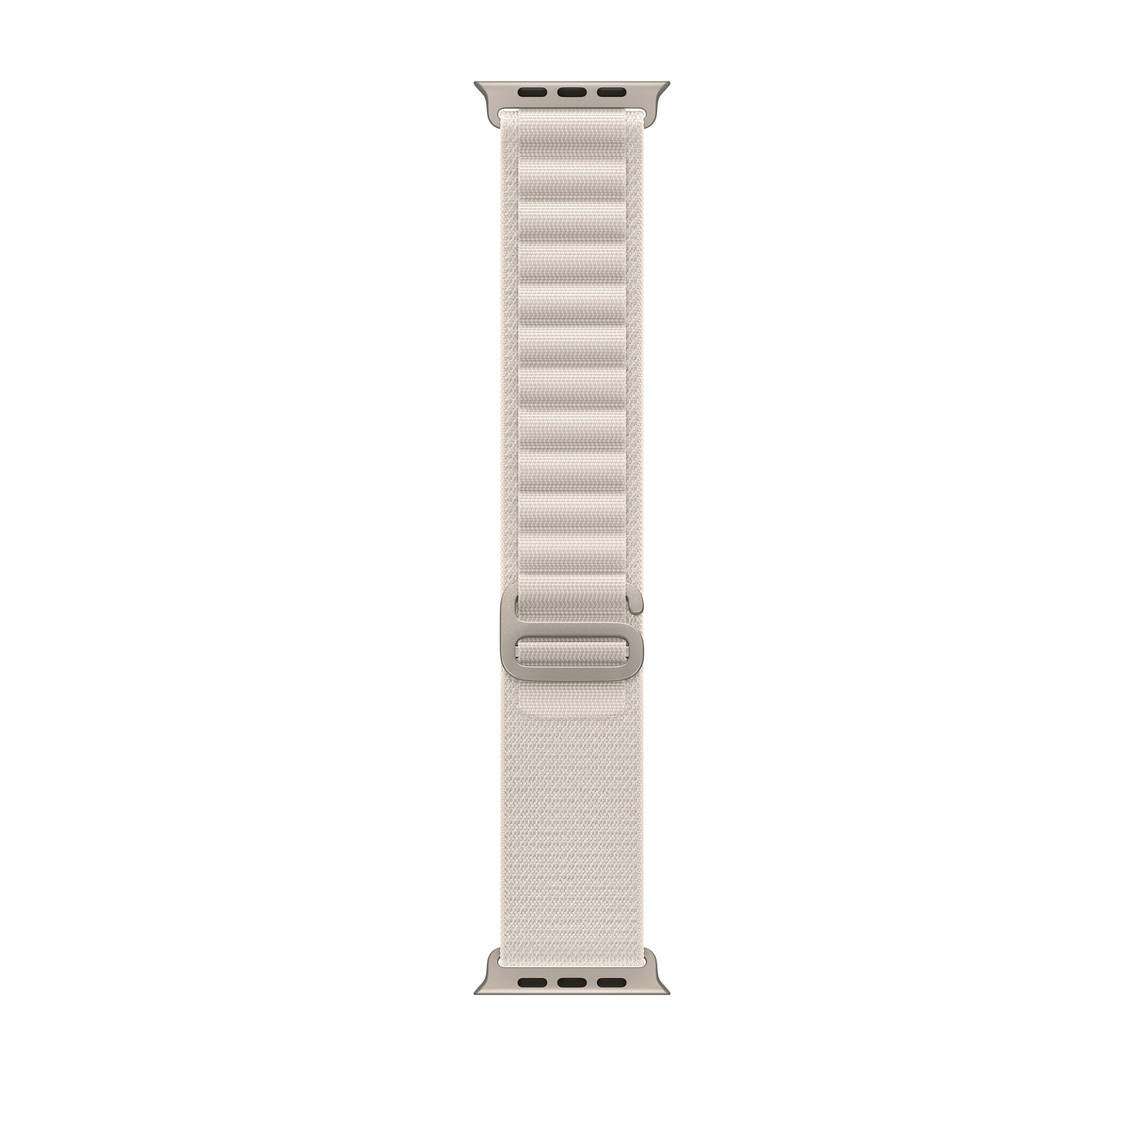 Bratara NylonStrap compatibila Smartwatch Ultra Watch IdealStore, Textila, Fara cusaturi ,Dimensiune 49 mm, Grey Edition